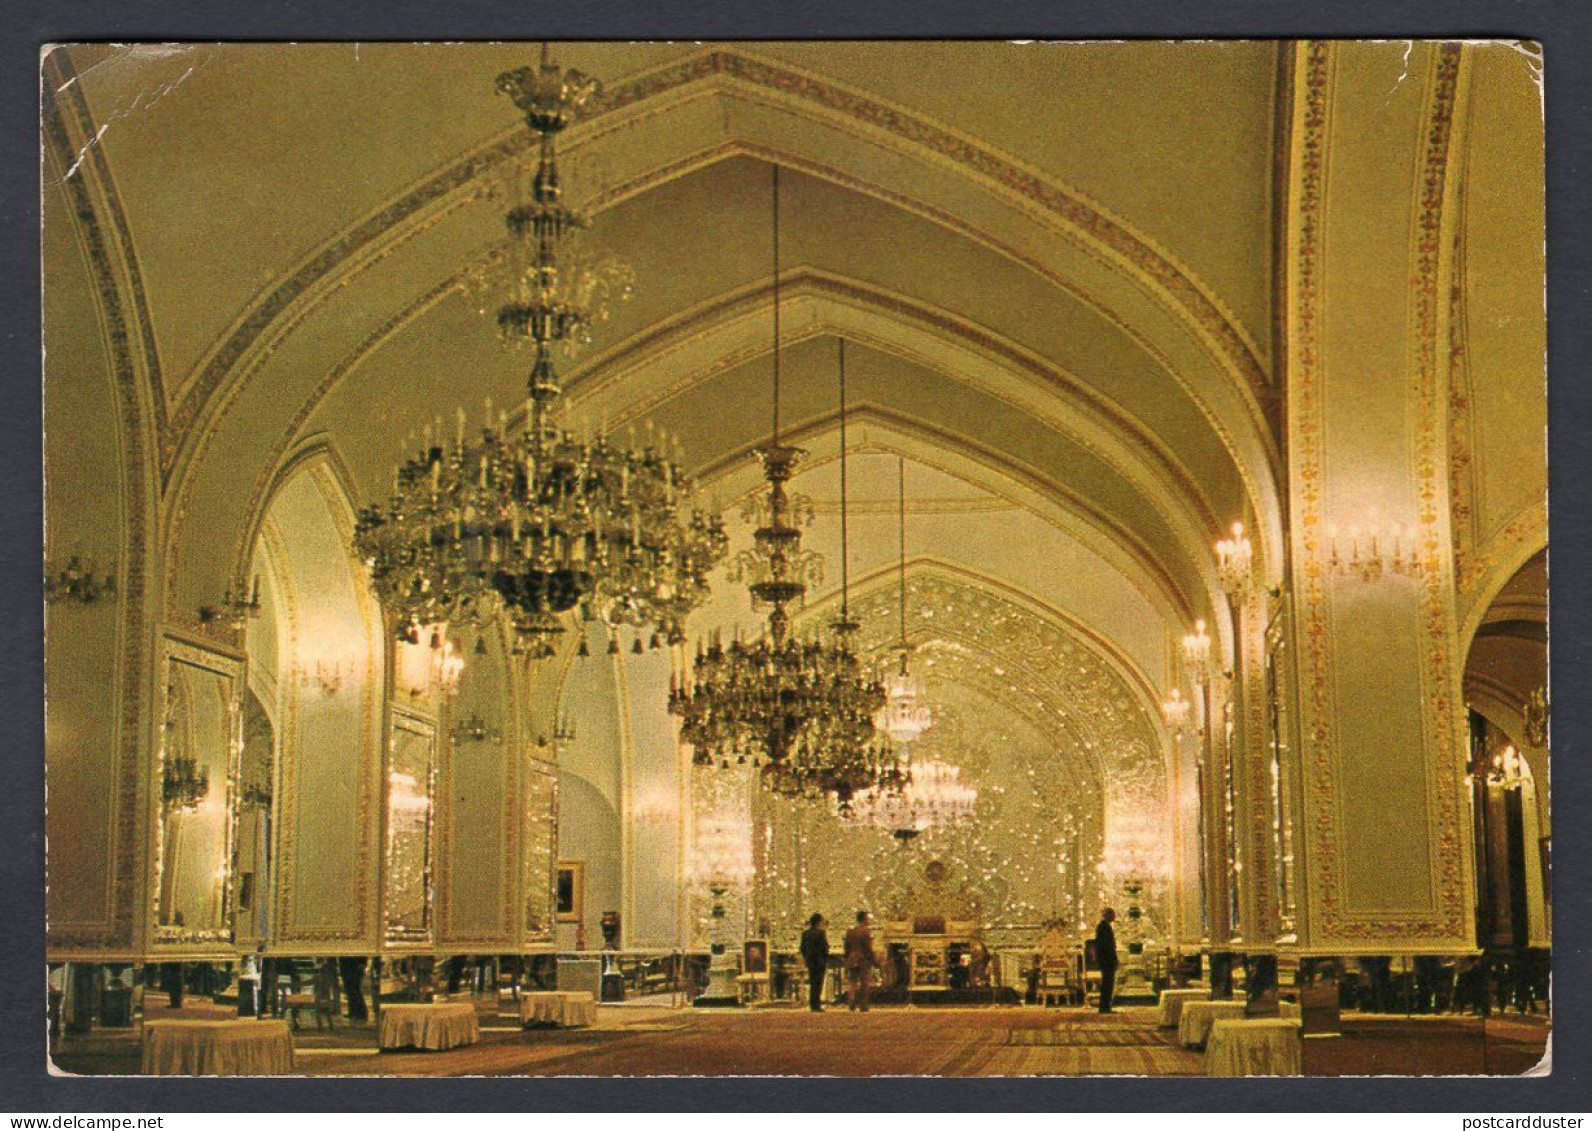 IRAN Tehran 1973 Meter Cancel On Postcard To Canada. Palace Interior (p3746) - Iran